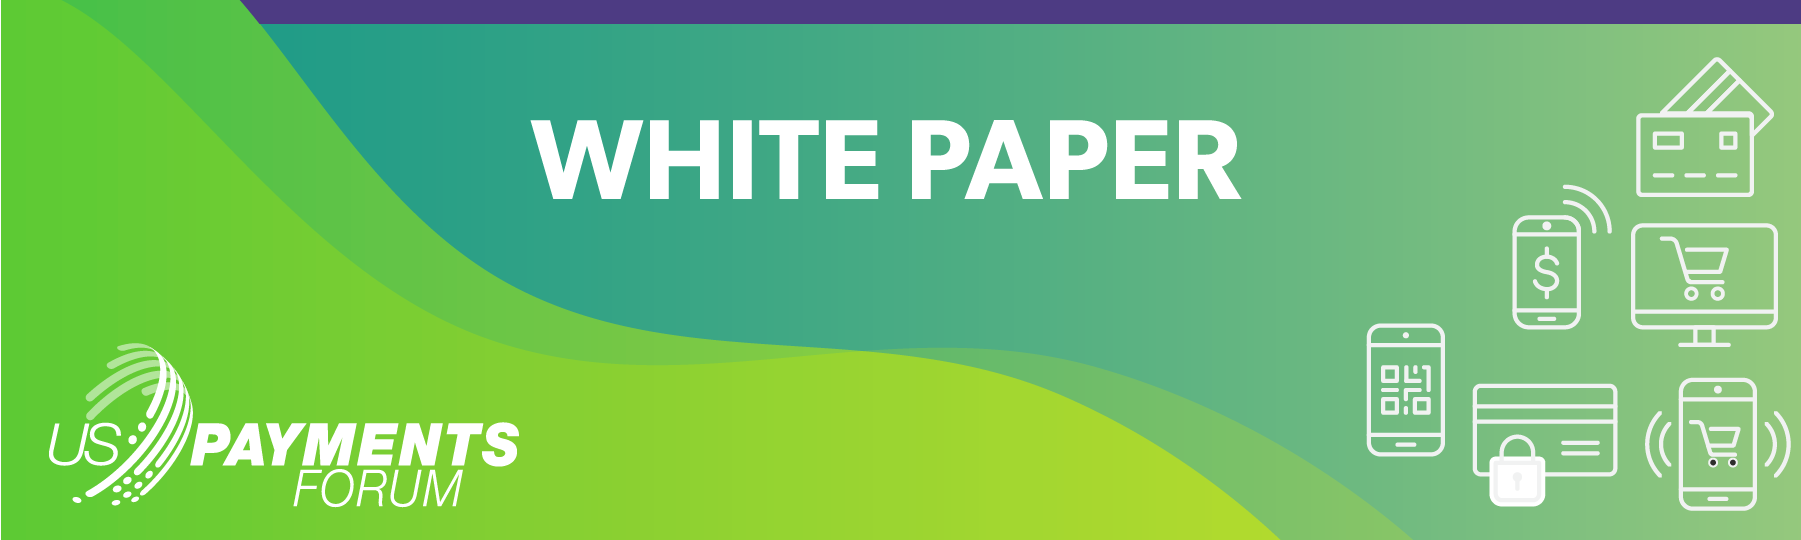 White Paper Header